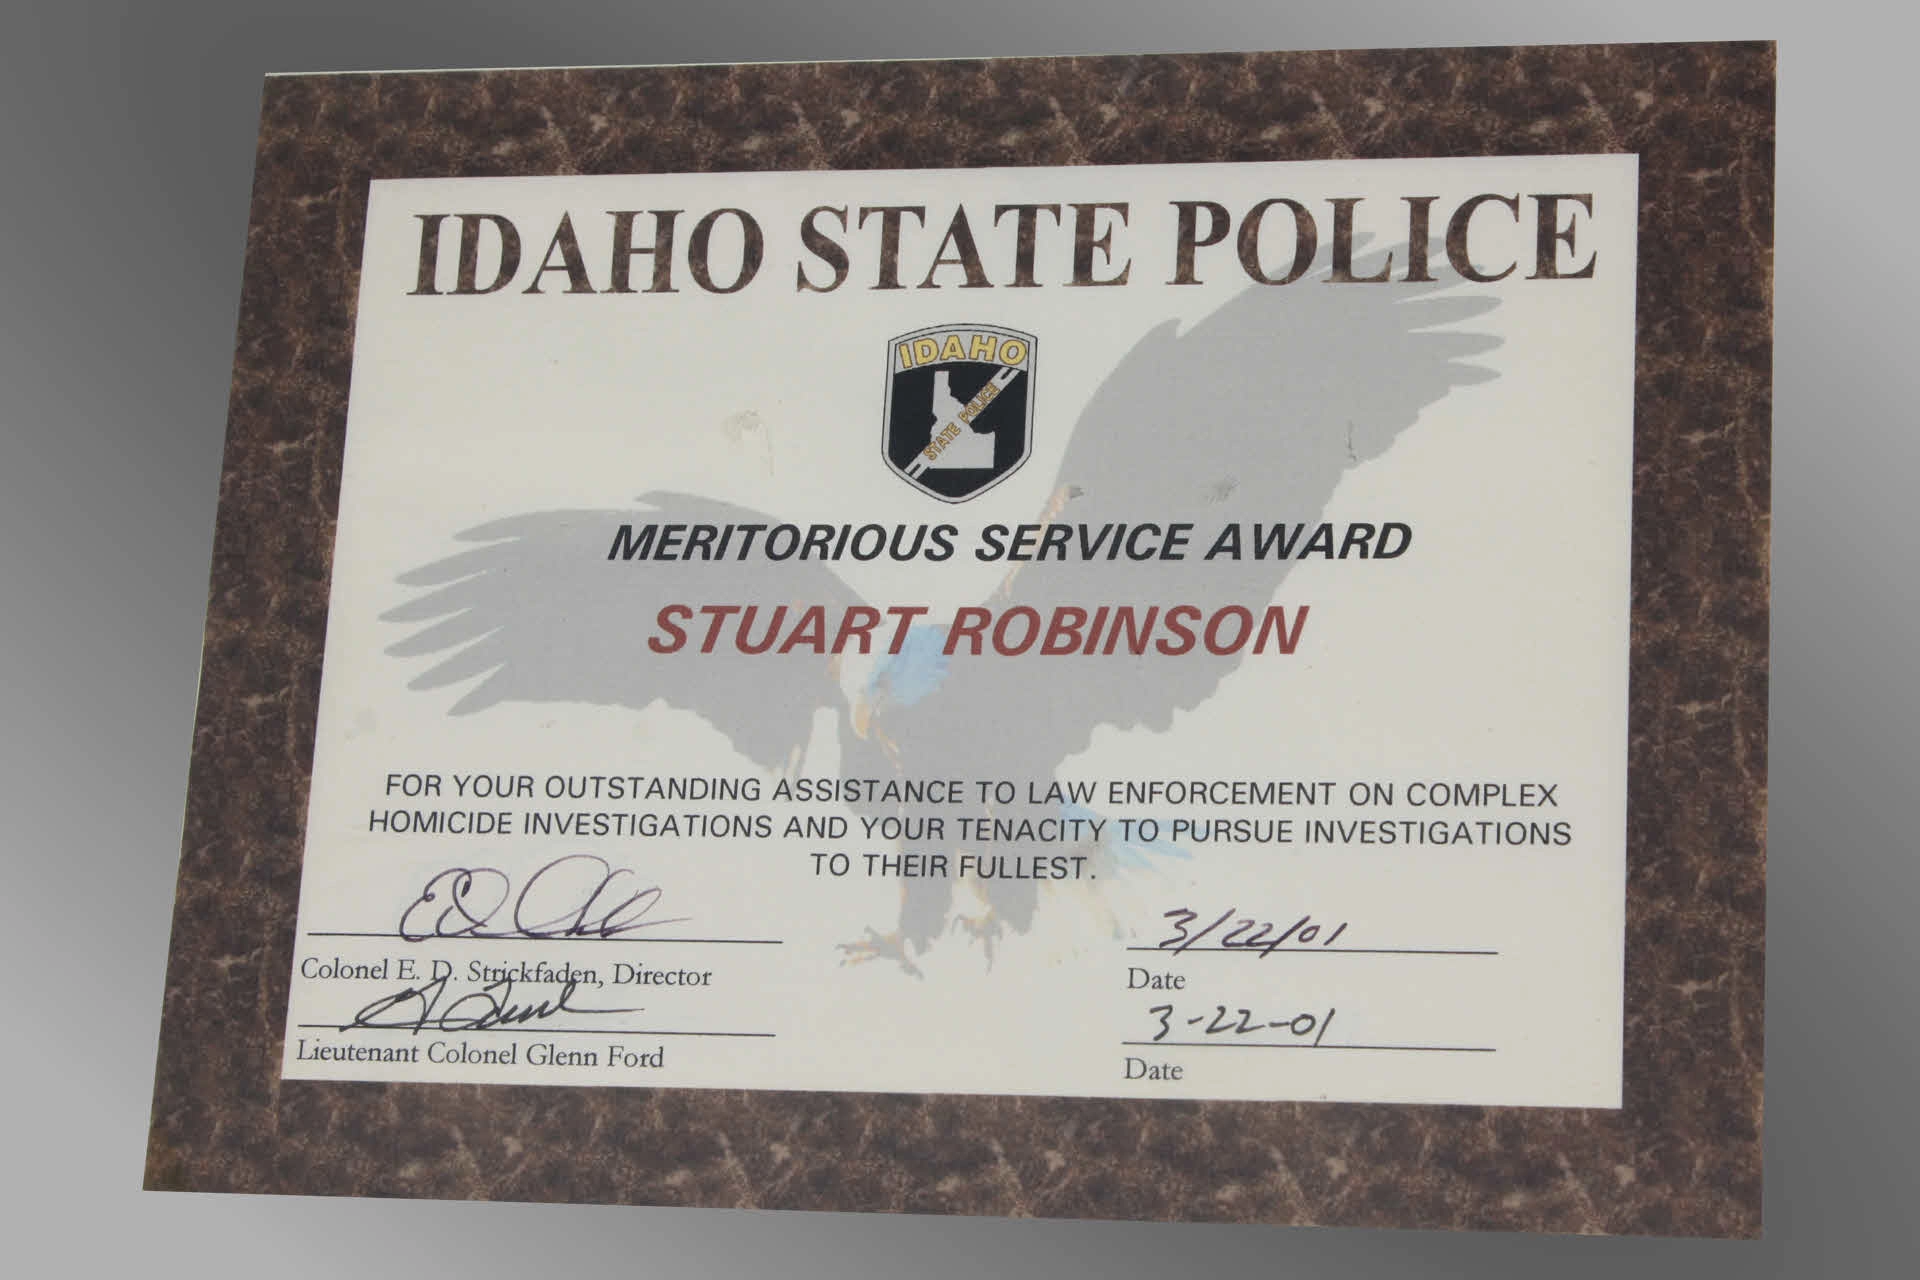 A Meritorious Service Award for Stuart Robinson